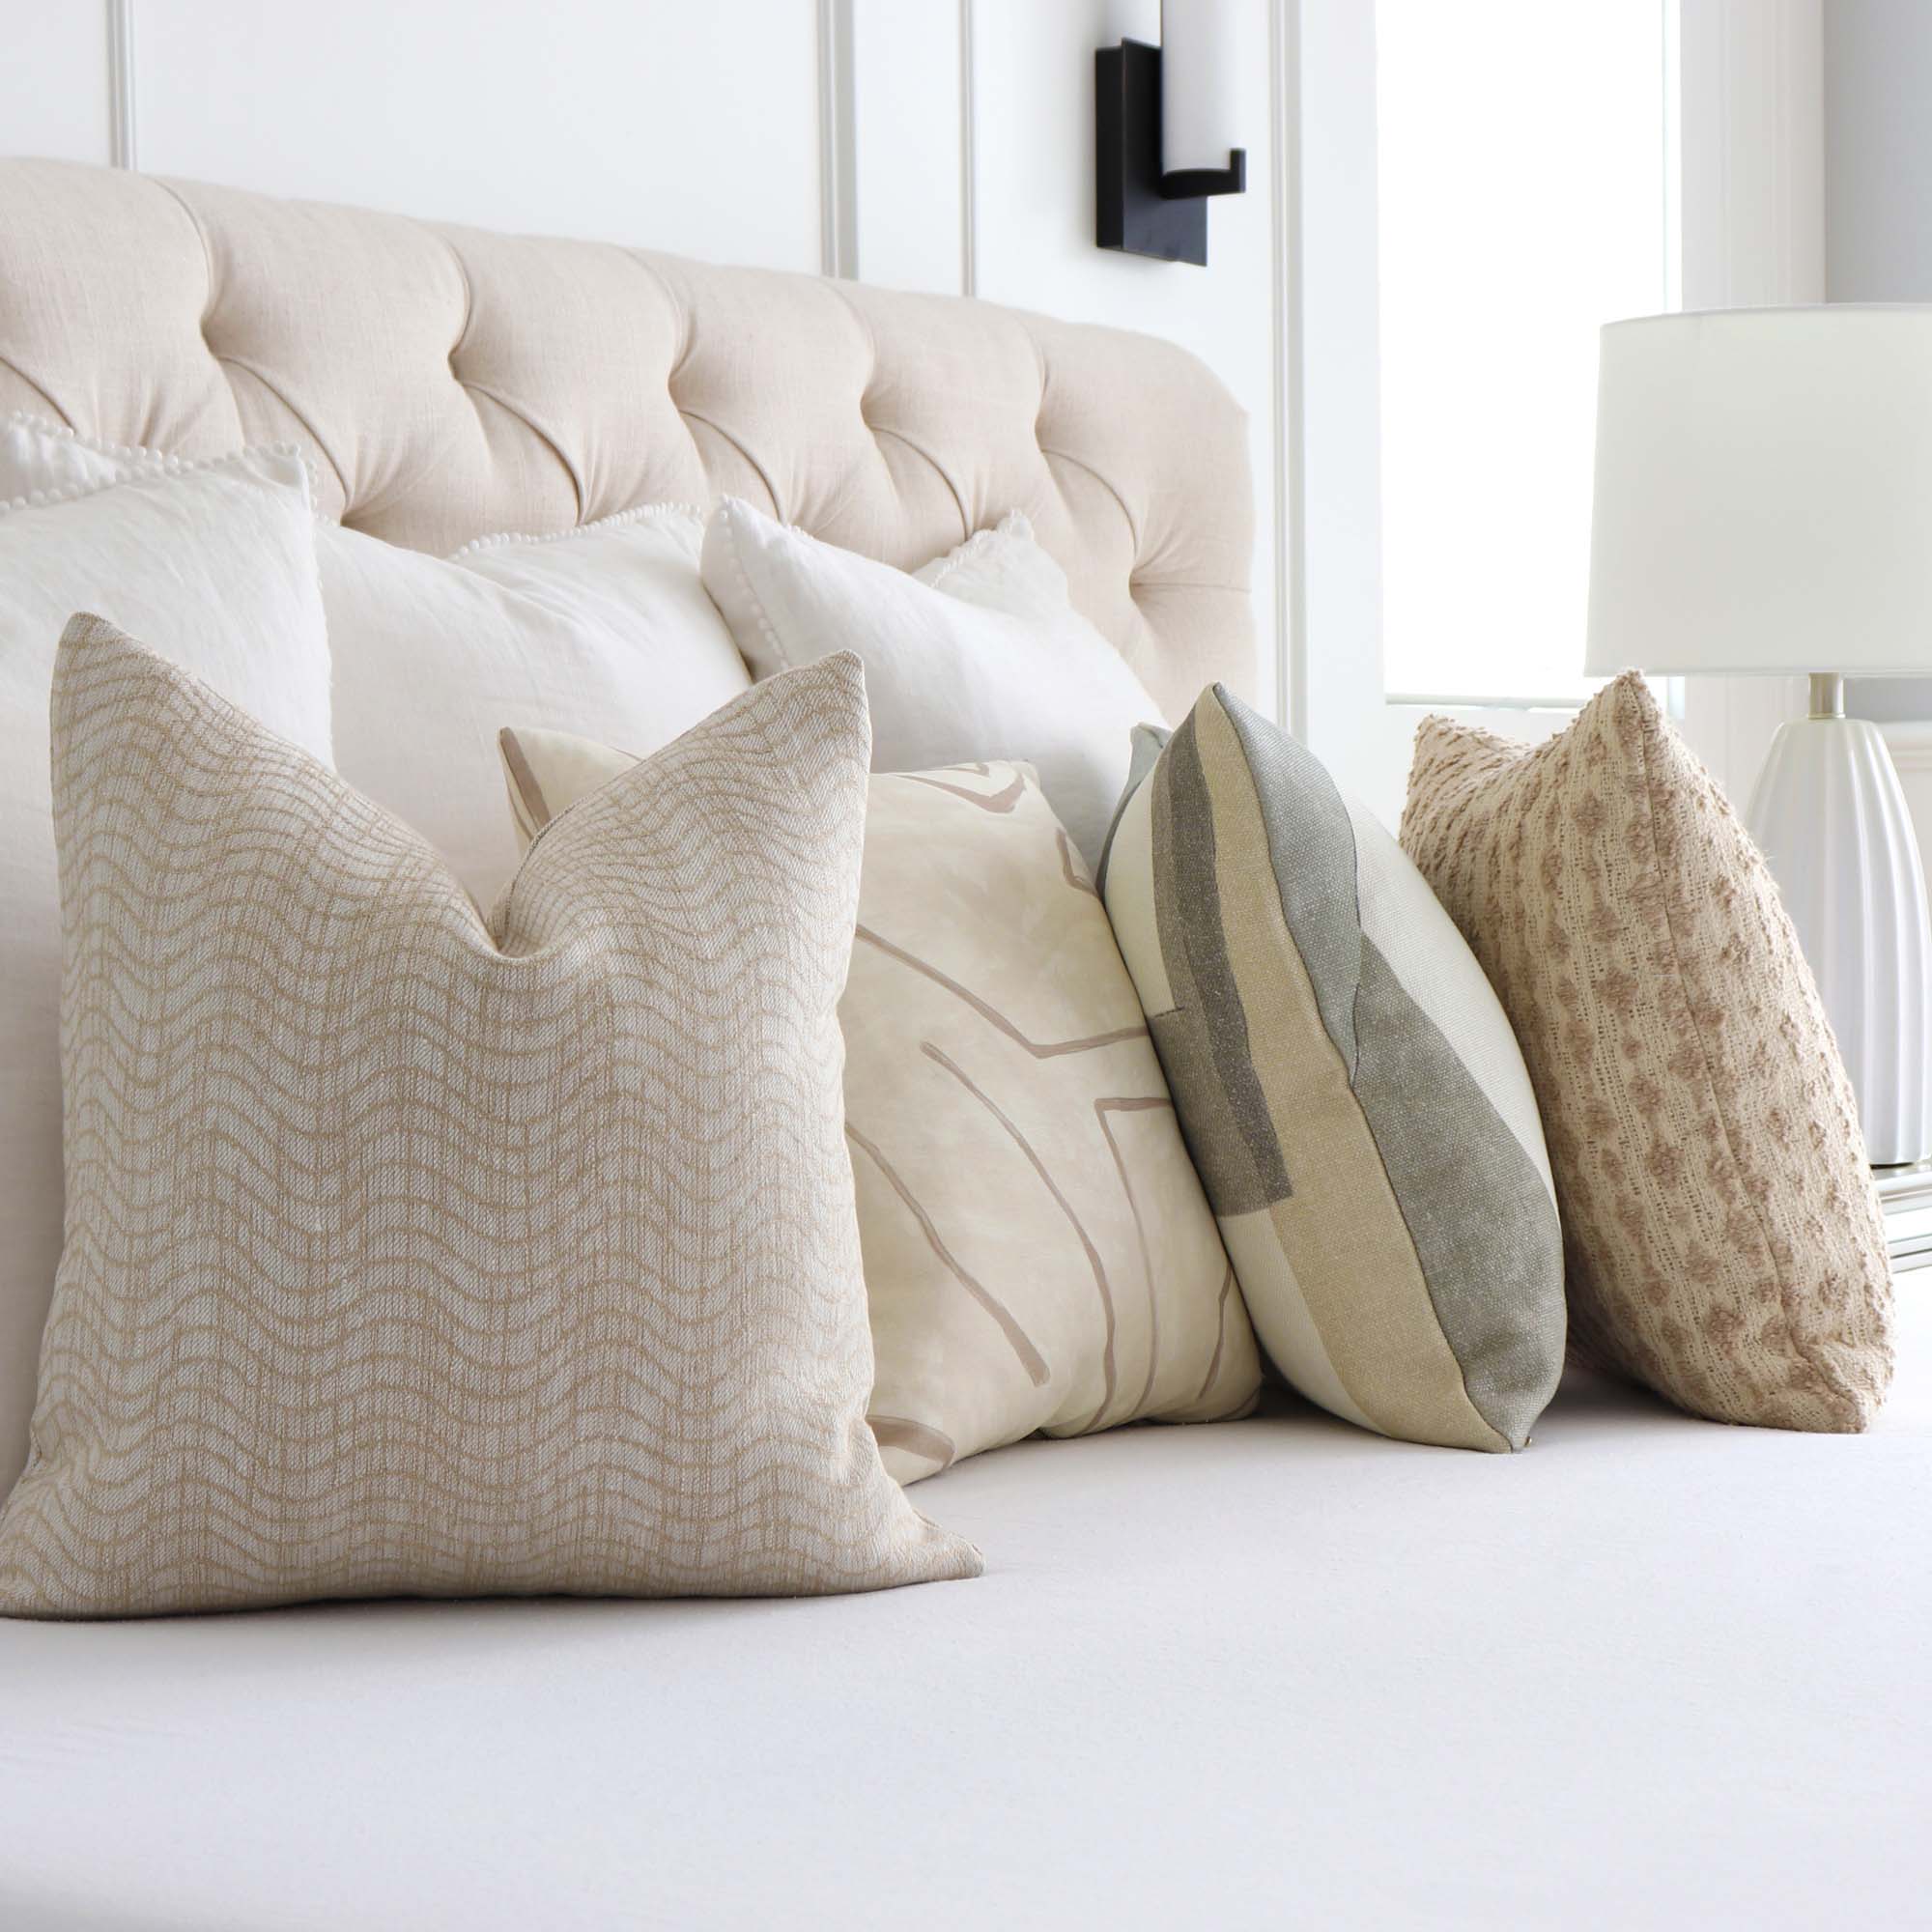 Kelly Wearstler Lee Jofa Dadami Honey Tan Woven Linen Striped Designer Throw Pillow Cover with Coordinating Throw Pillows